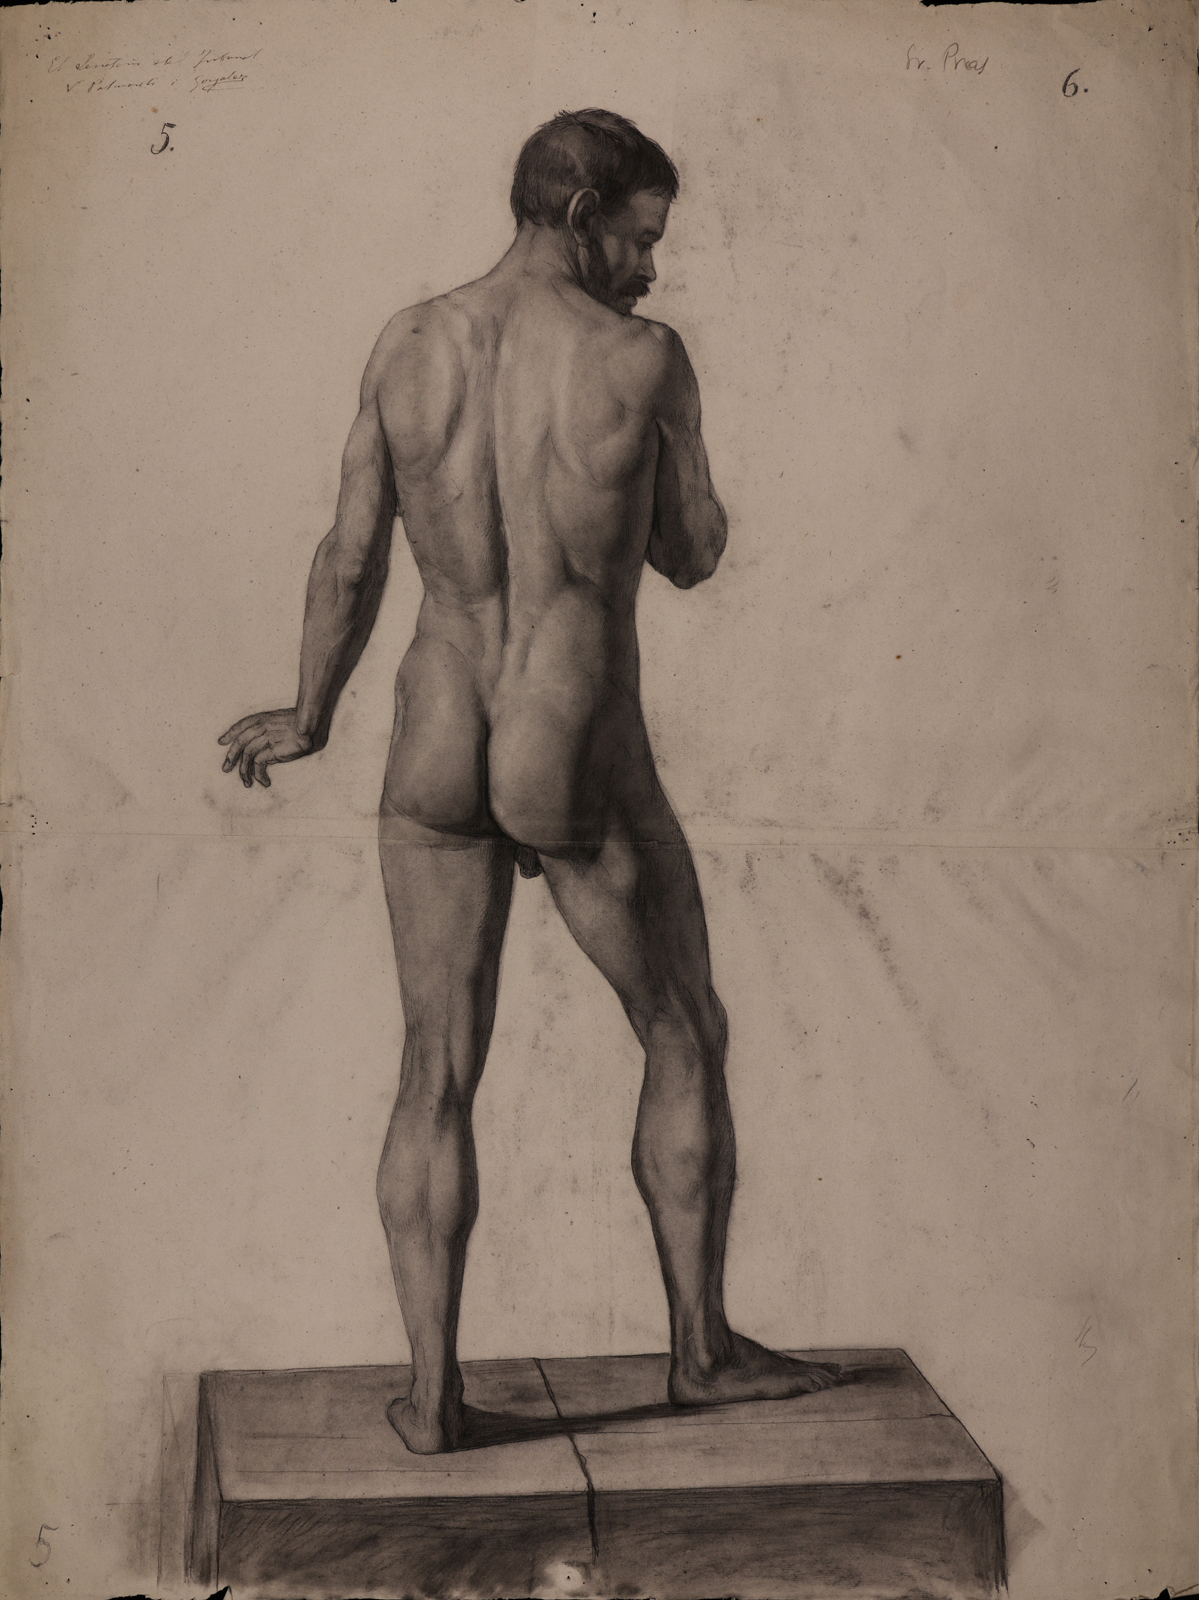 Pras - Estudio de modelo masculino desnudo de espaldas